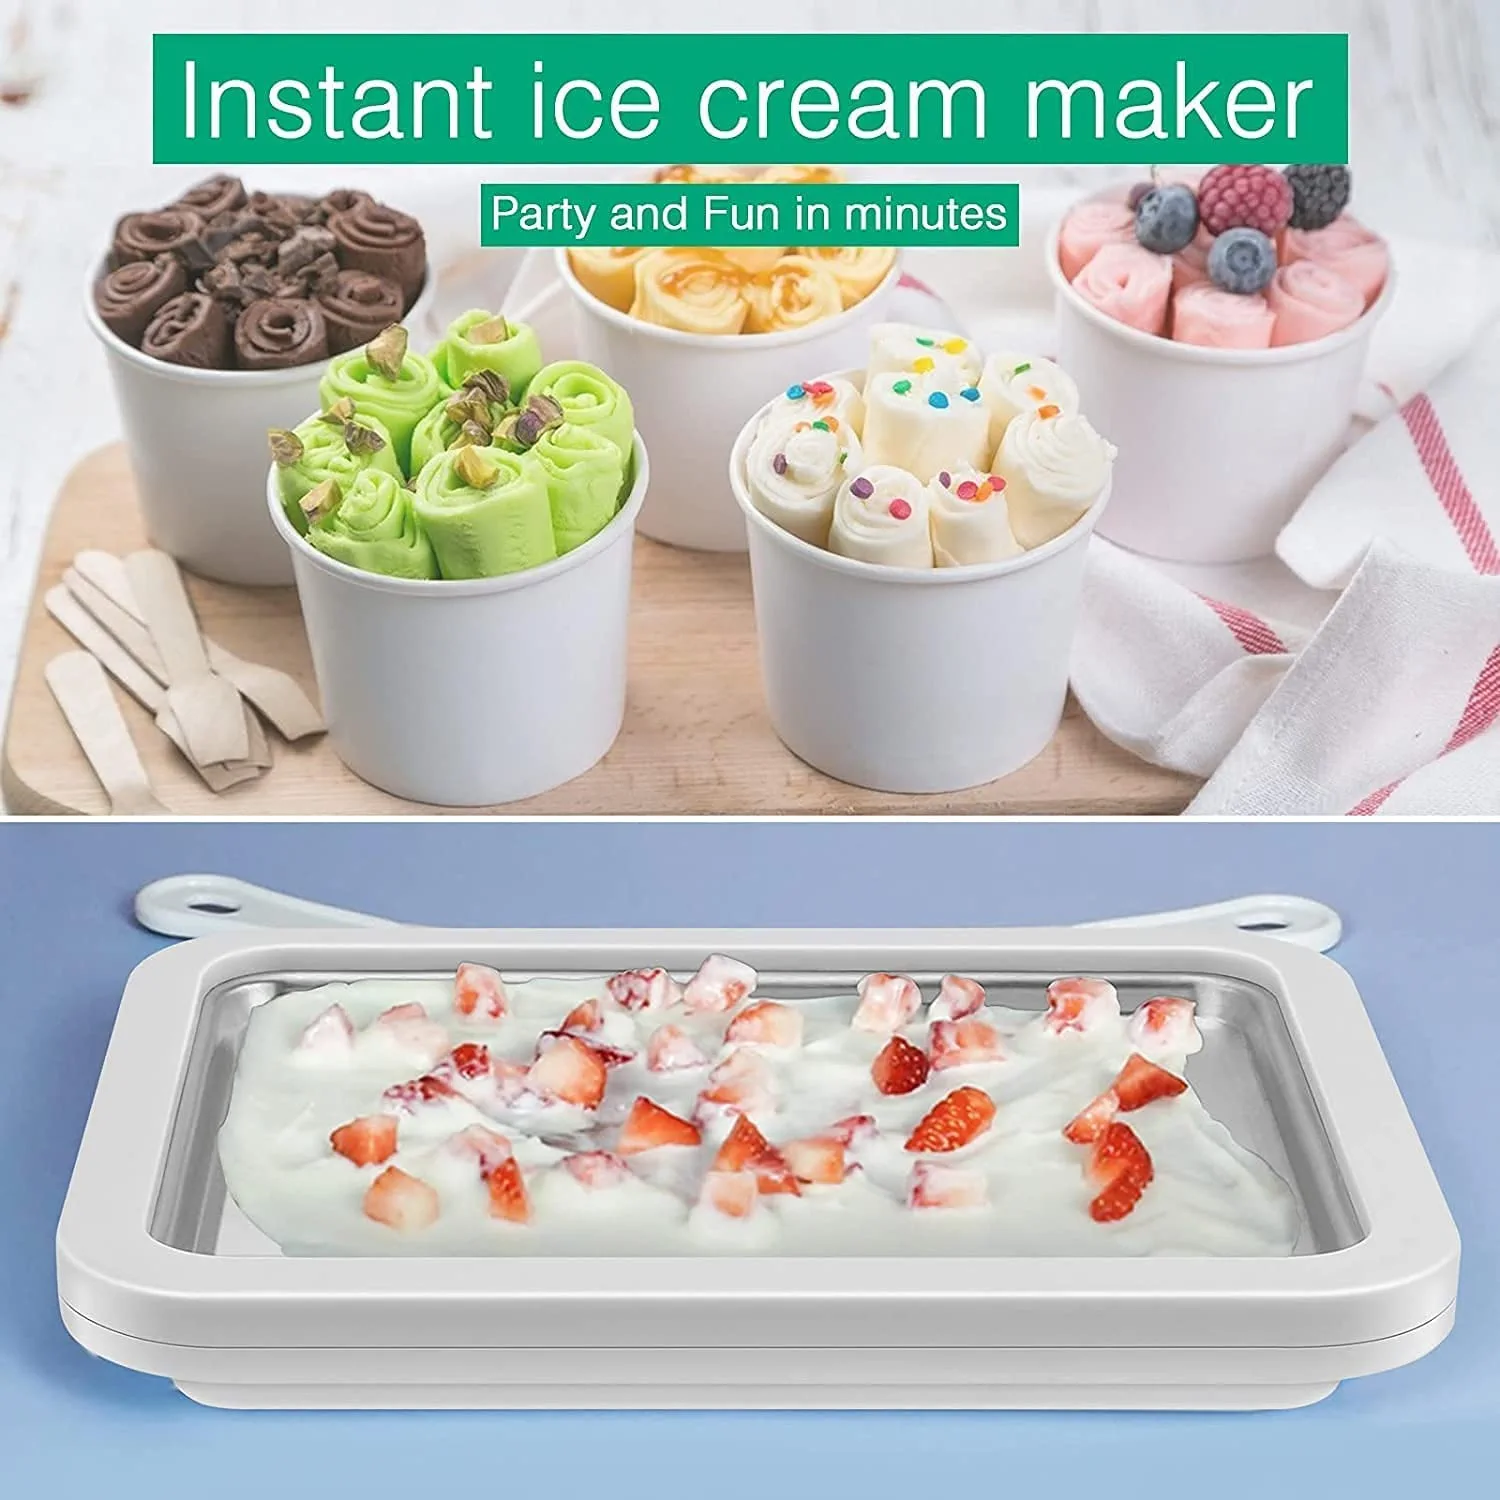 Eb Ice Cream Maker/Pan/Roll - Frozen Yogurt, Sorbet, Gelato - Family Fun, Healthy Alternative DIY at Home (Turquoise)